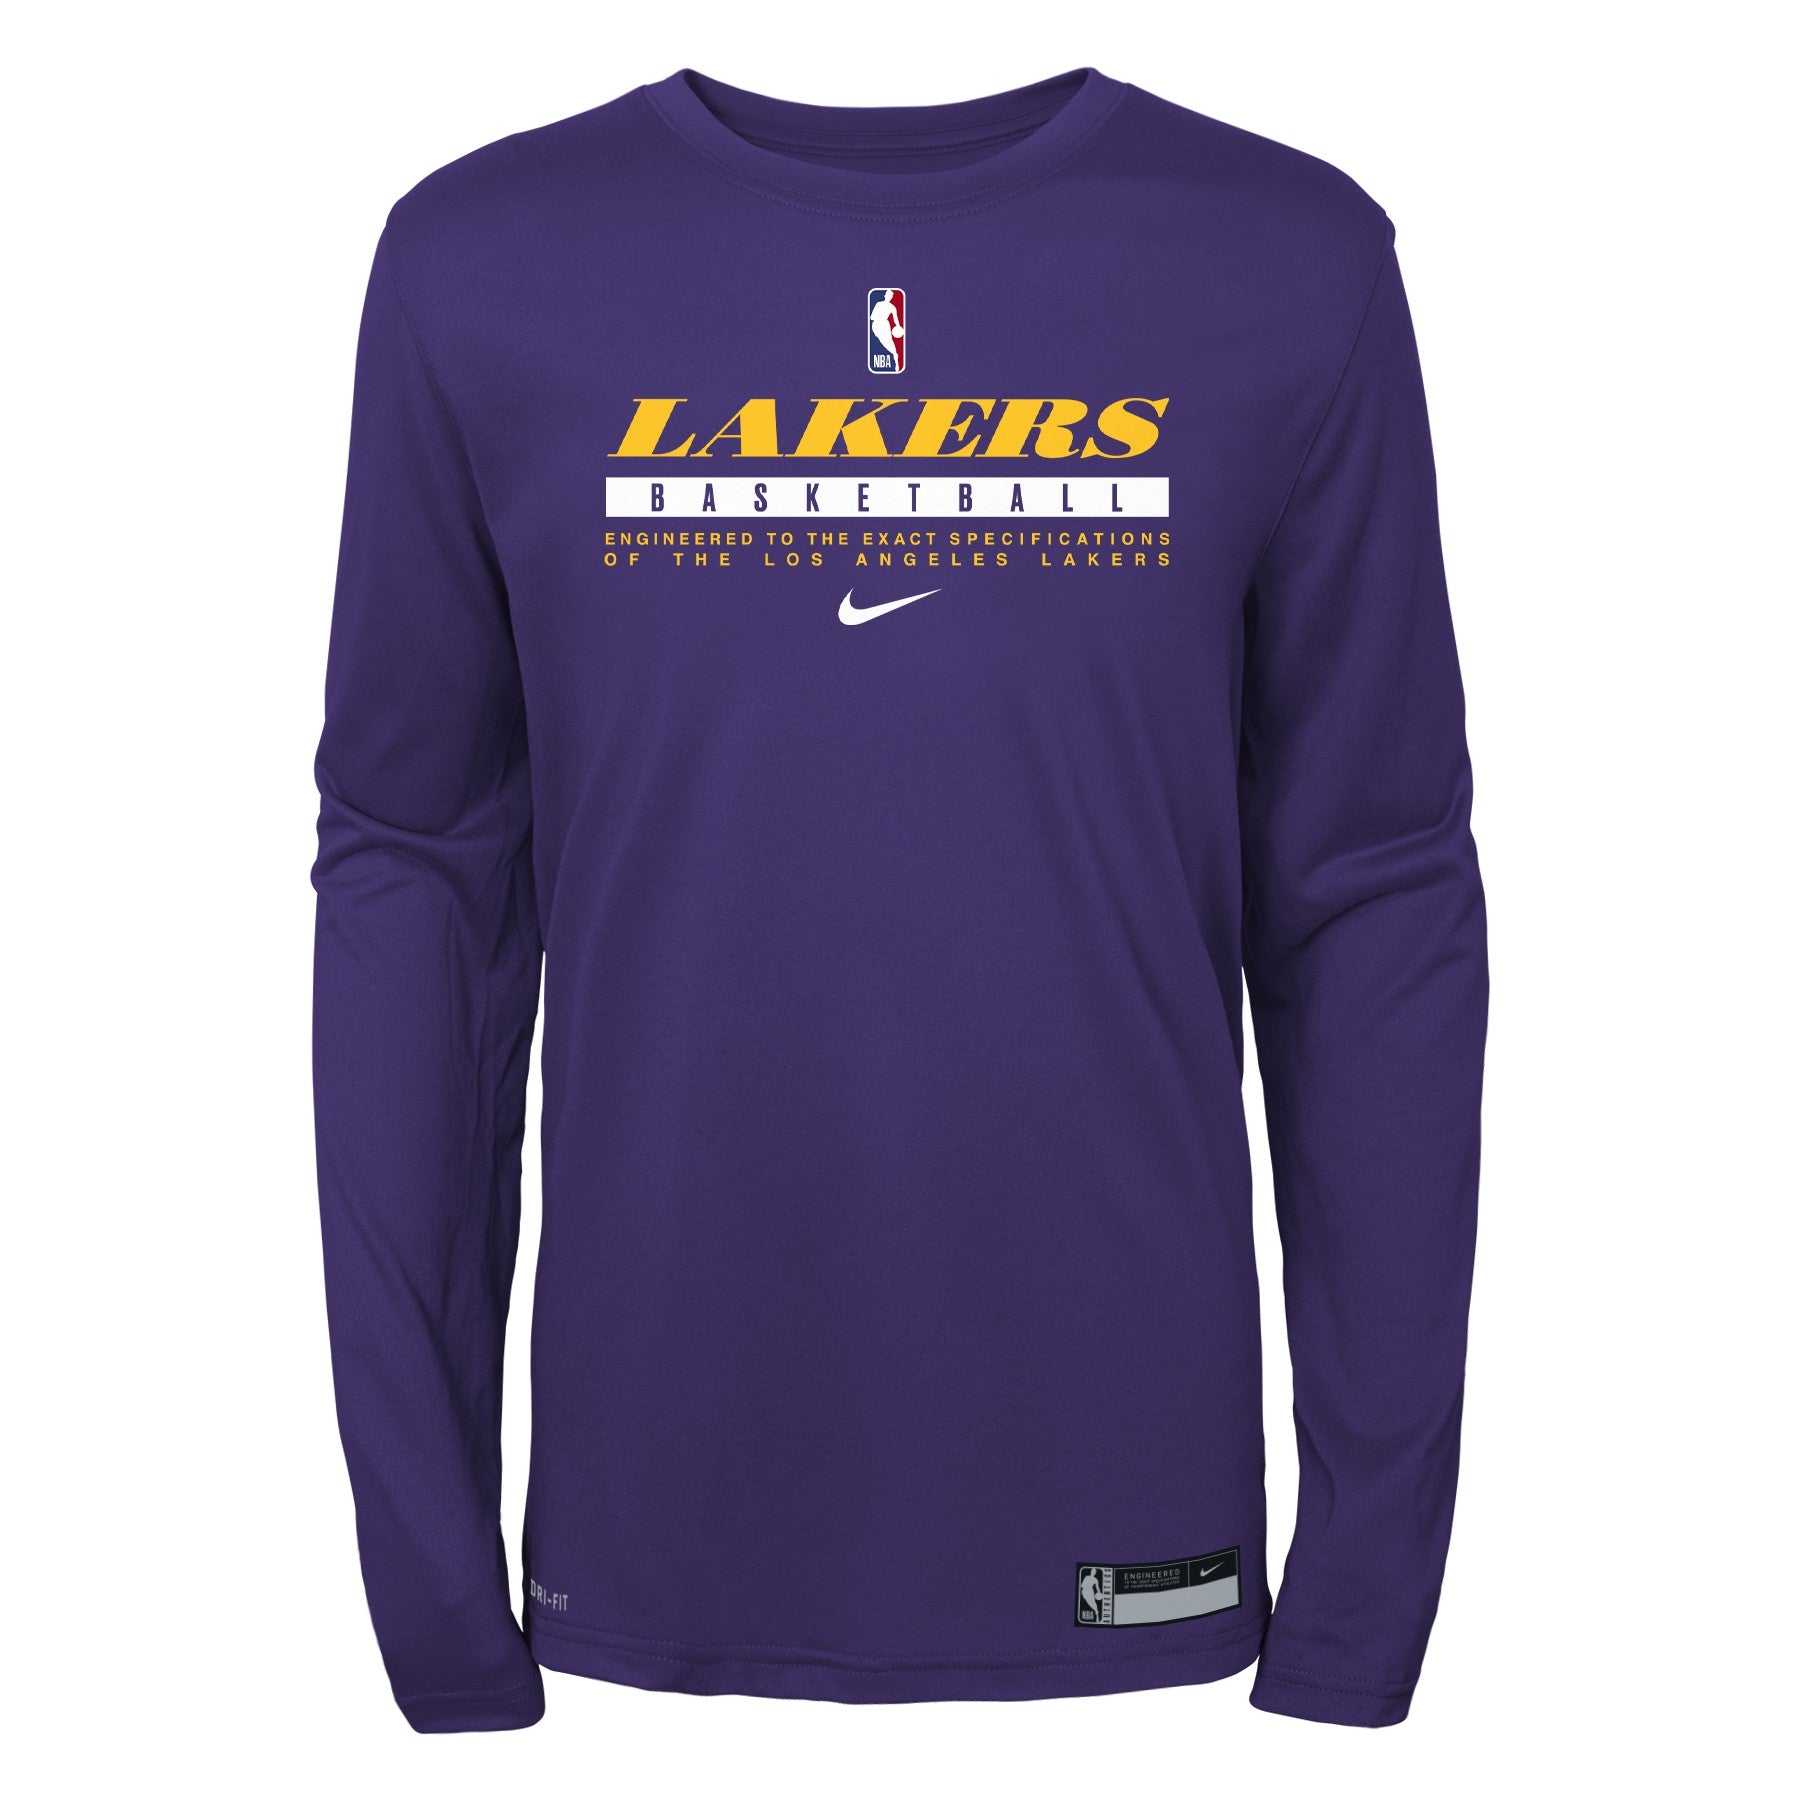 Nike Men Purple Team NBA LOS ANGELES LAKERS LOGO Printed Round Neck  Basketball T-Shirt